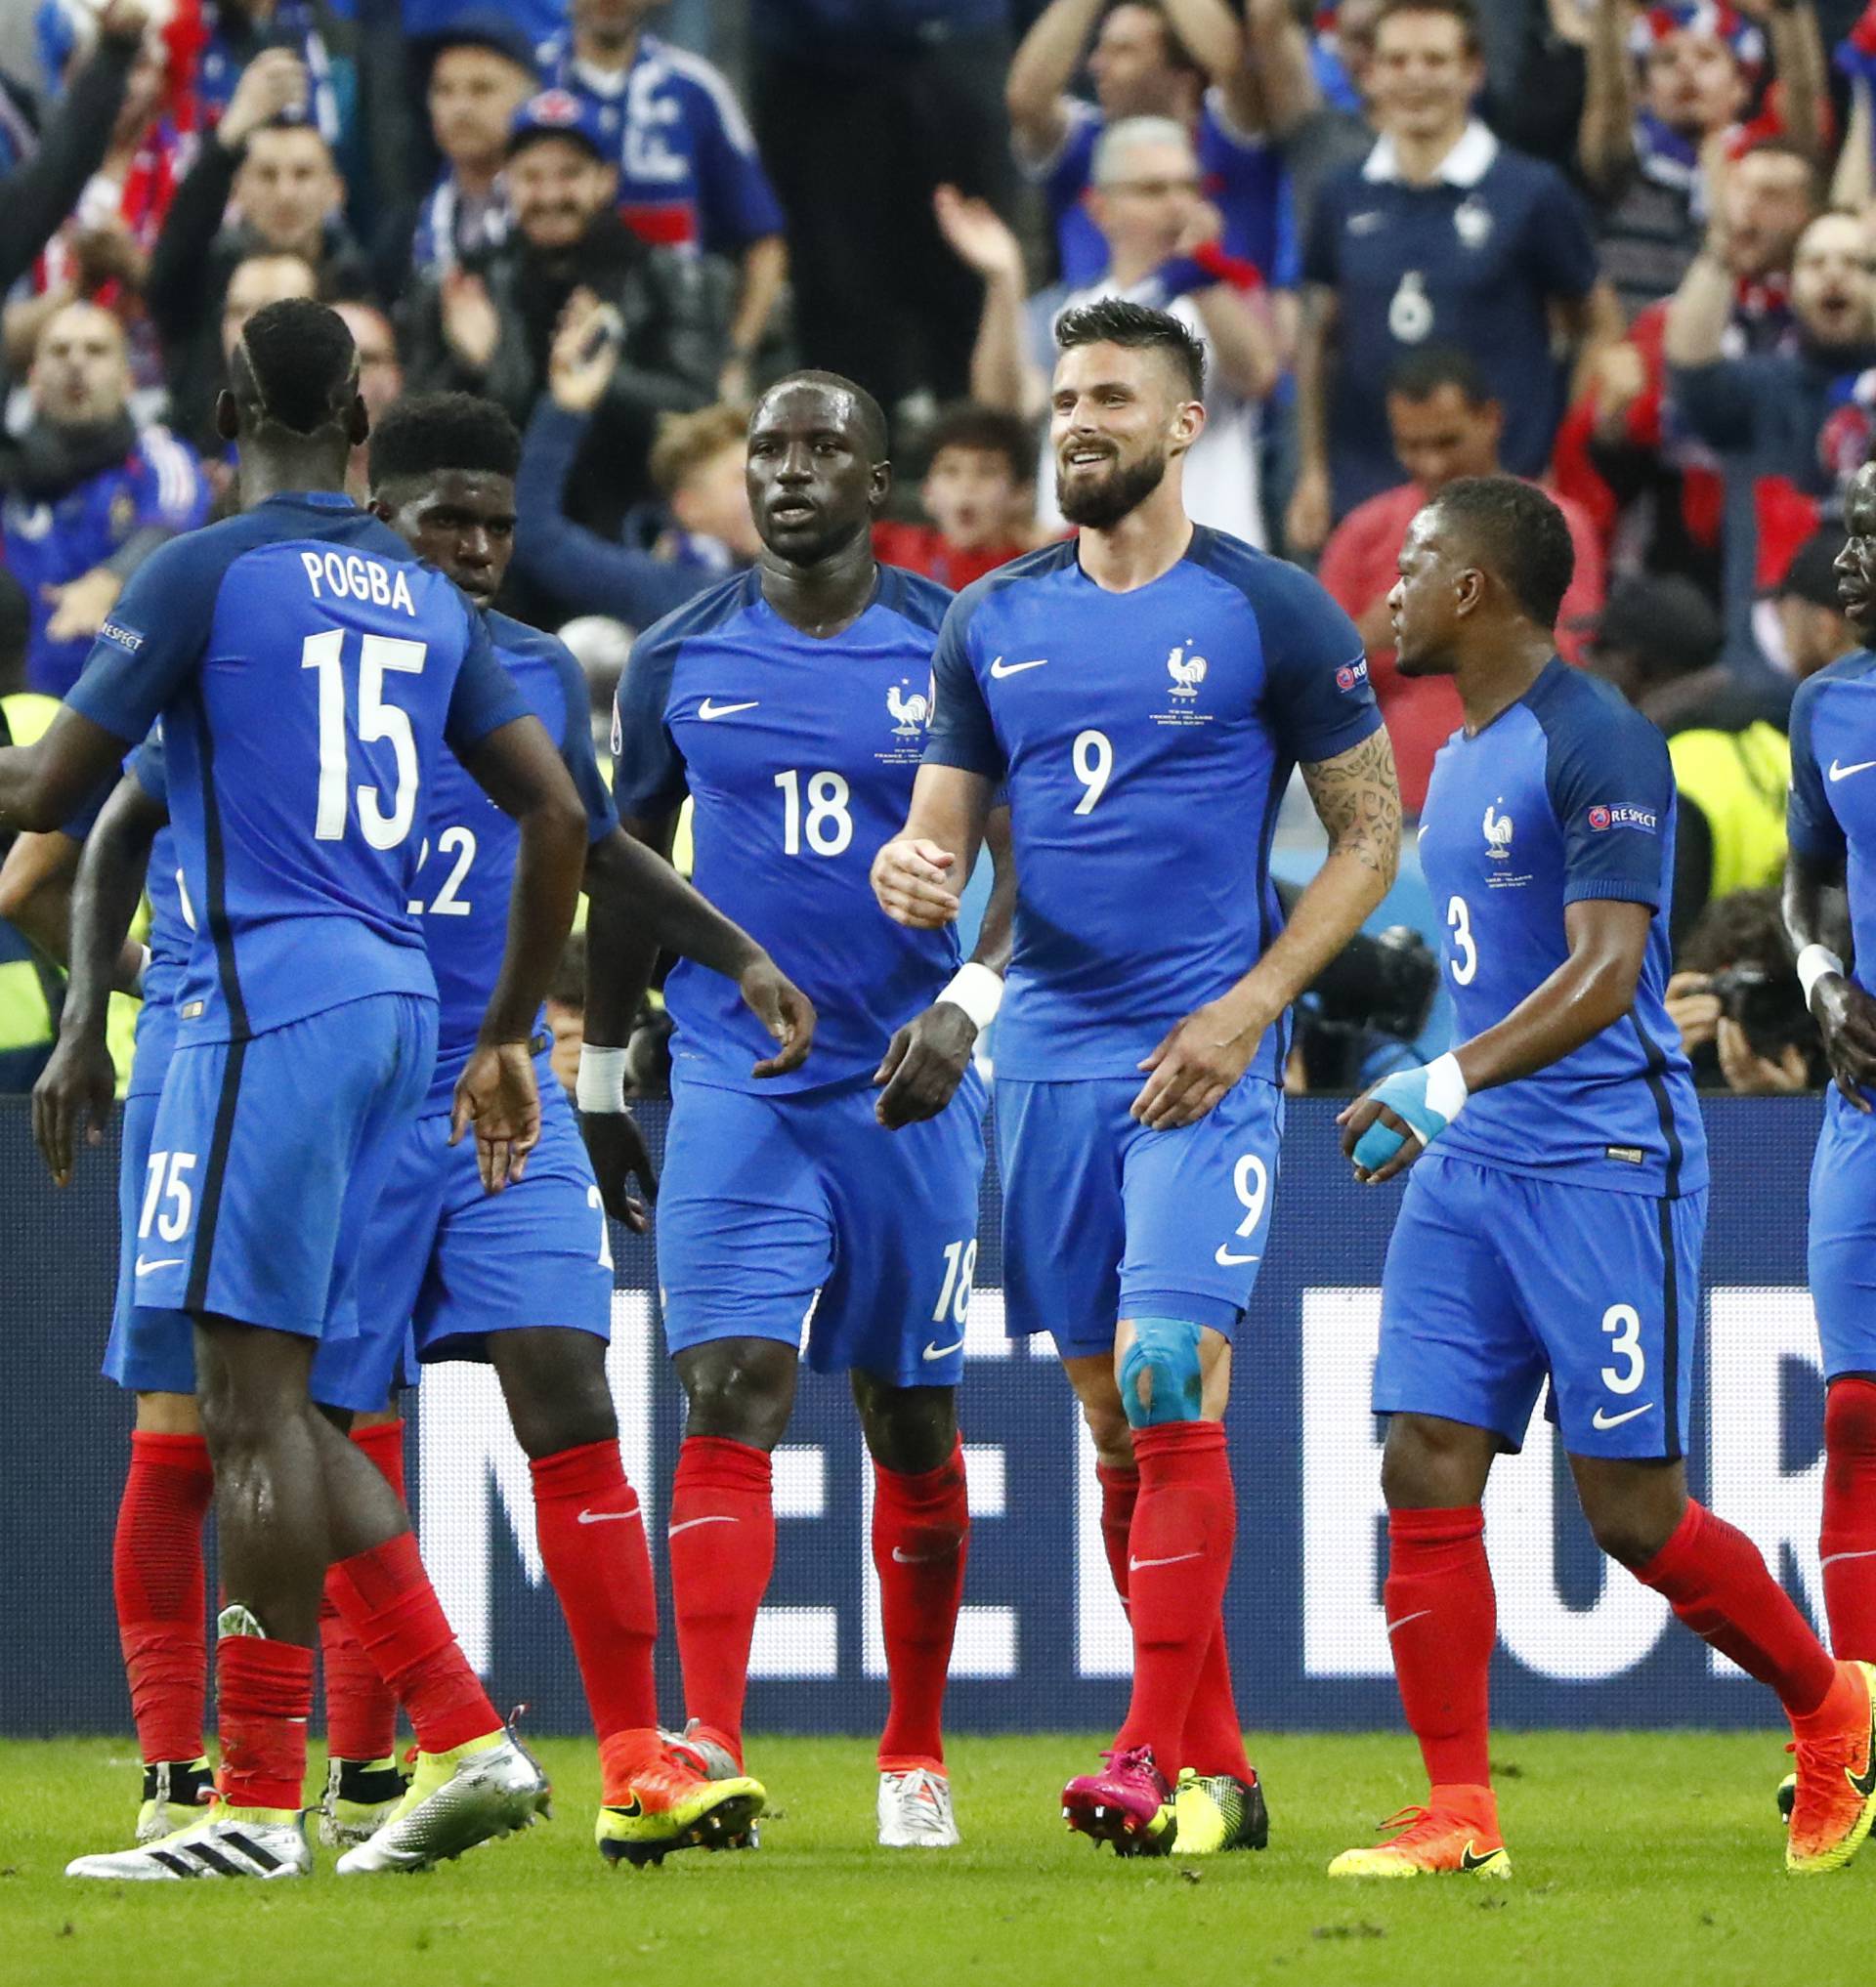 France v Iceland - EURO 2016 - Quarter Final